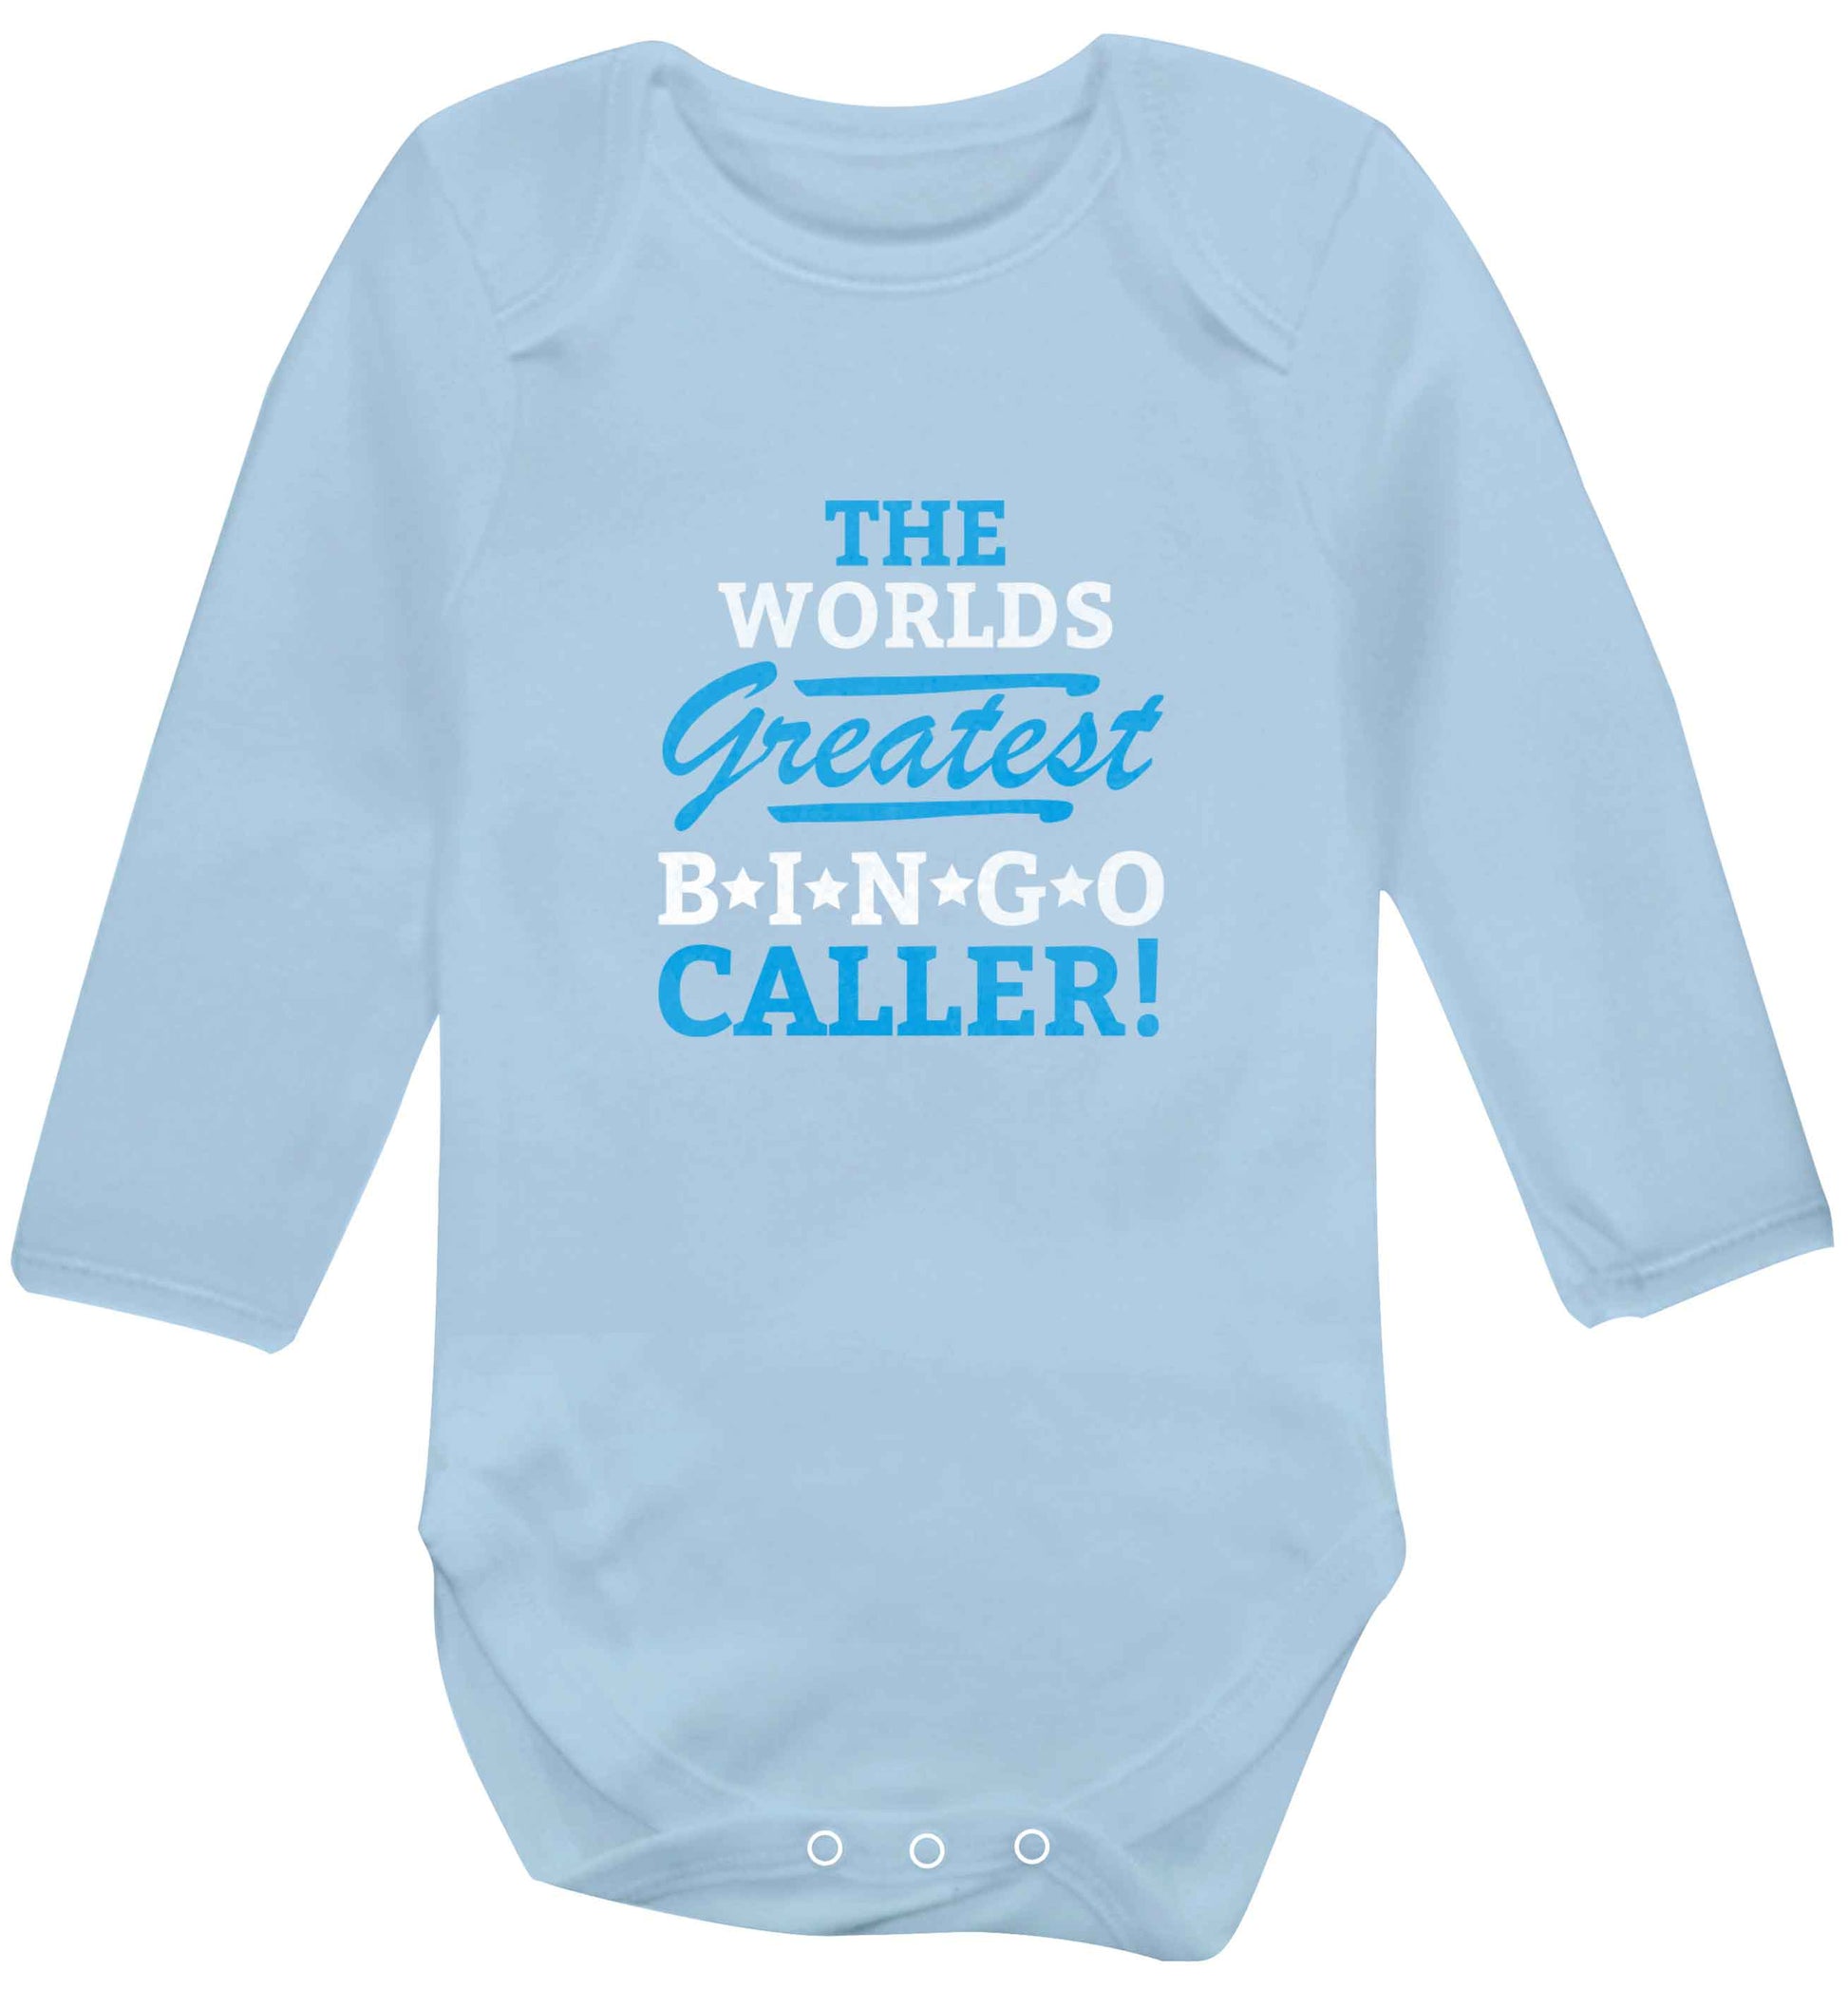 Worlds greatest bingo caller baby vest long sleeved pale blue 6-12 months